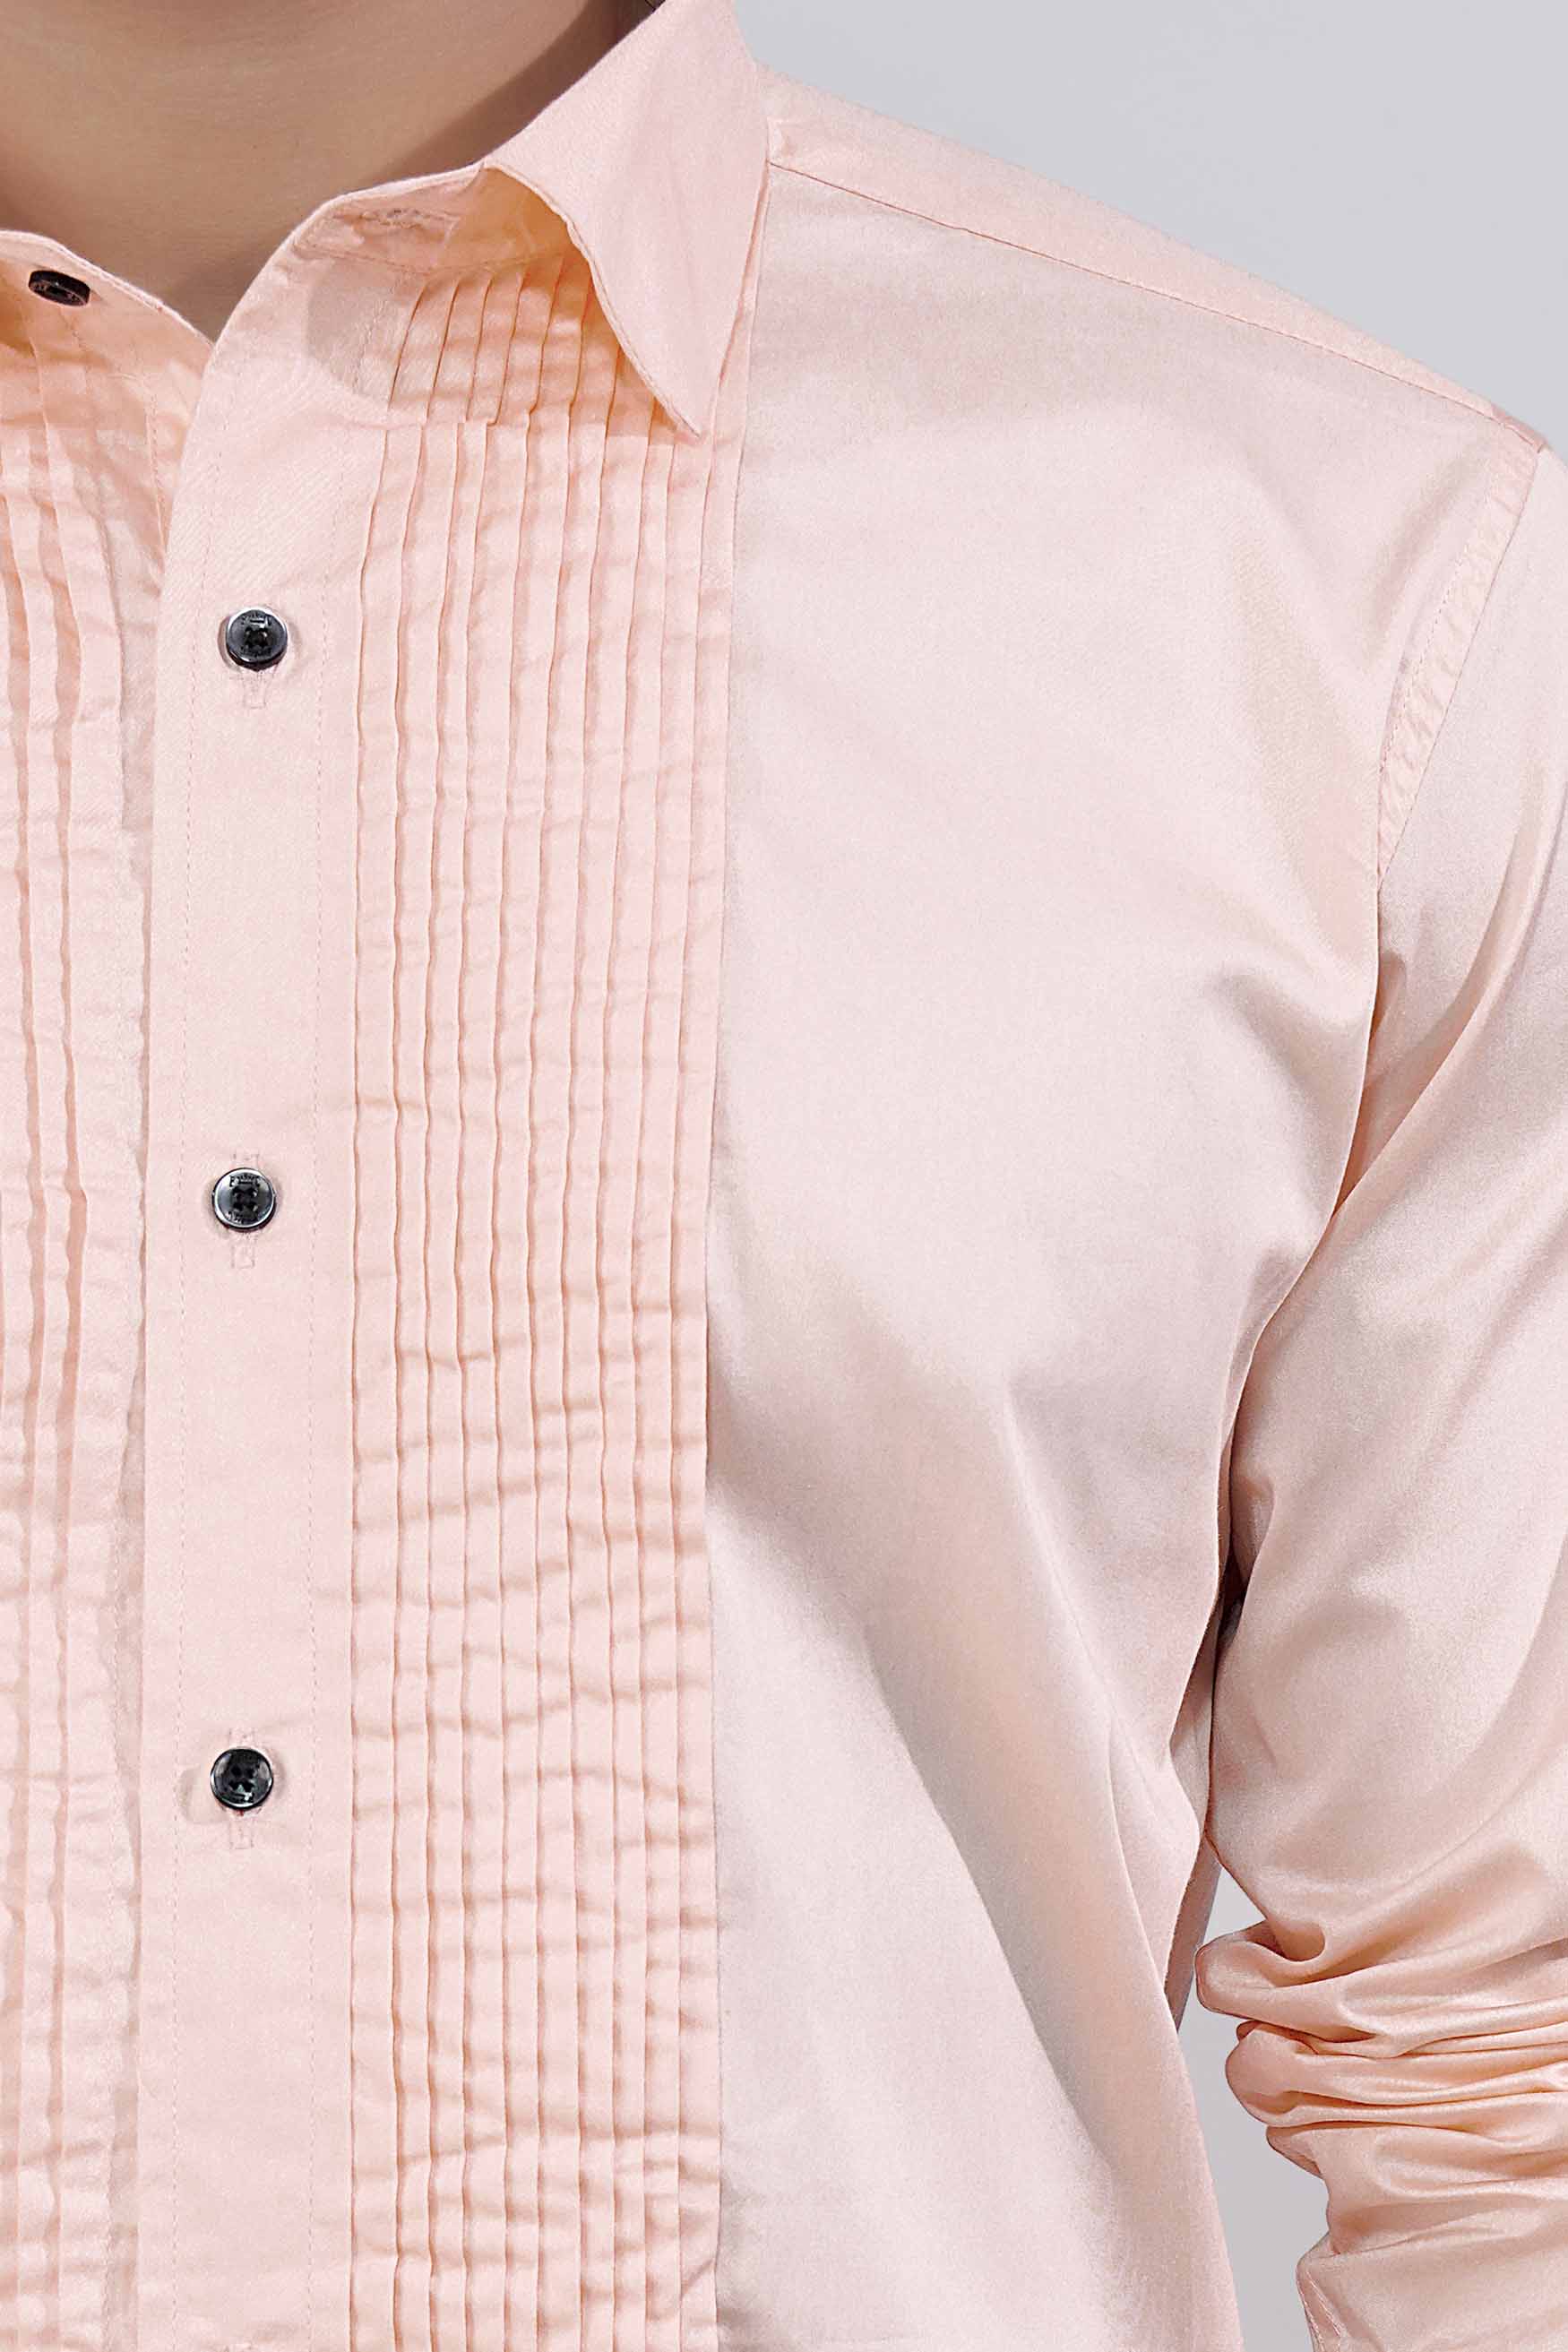 Oyster Pink Subtle Sheen Super Soft Premium Cotton Tuxedo Shirt